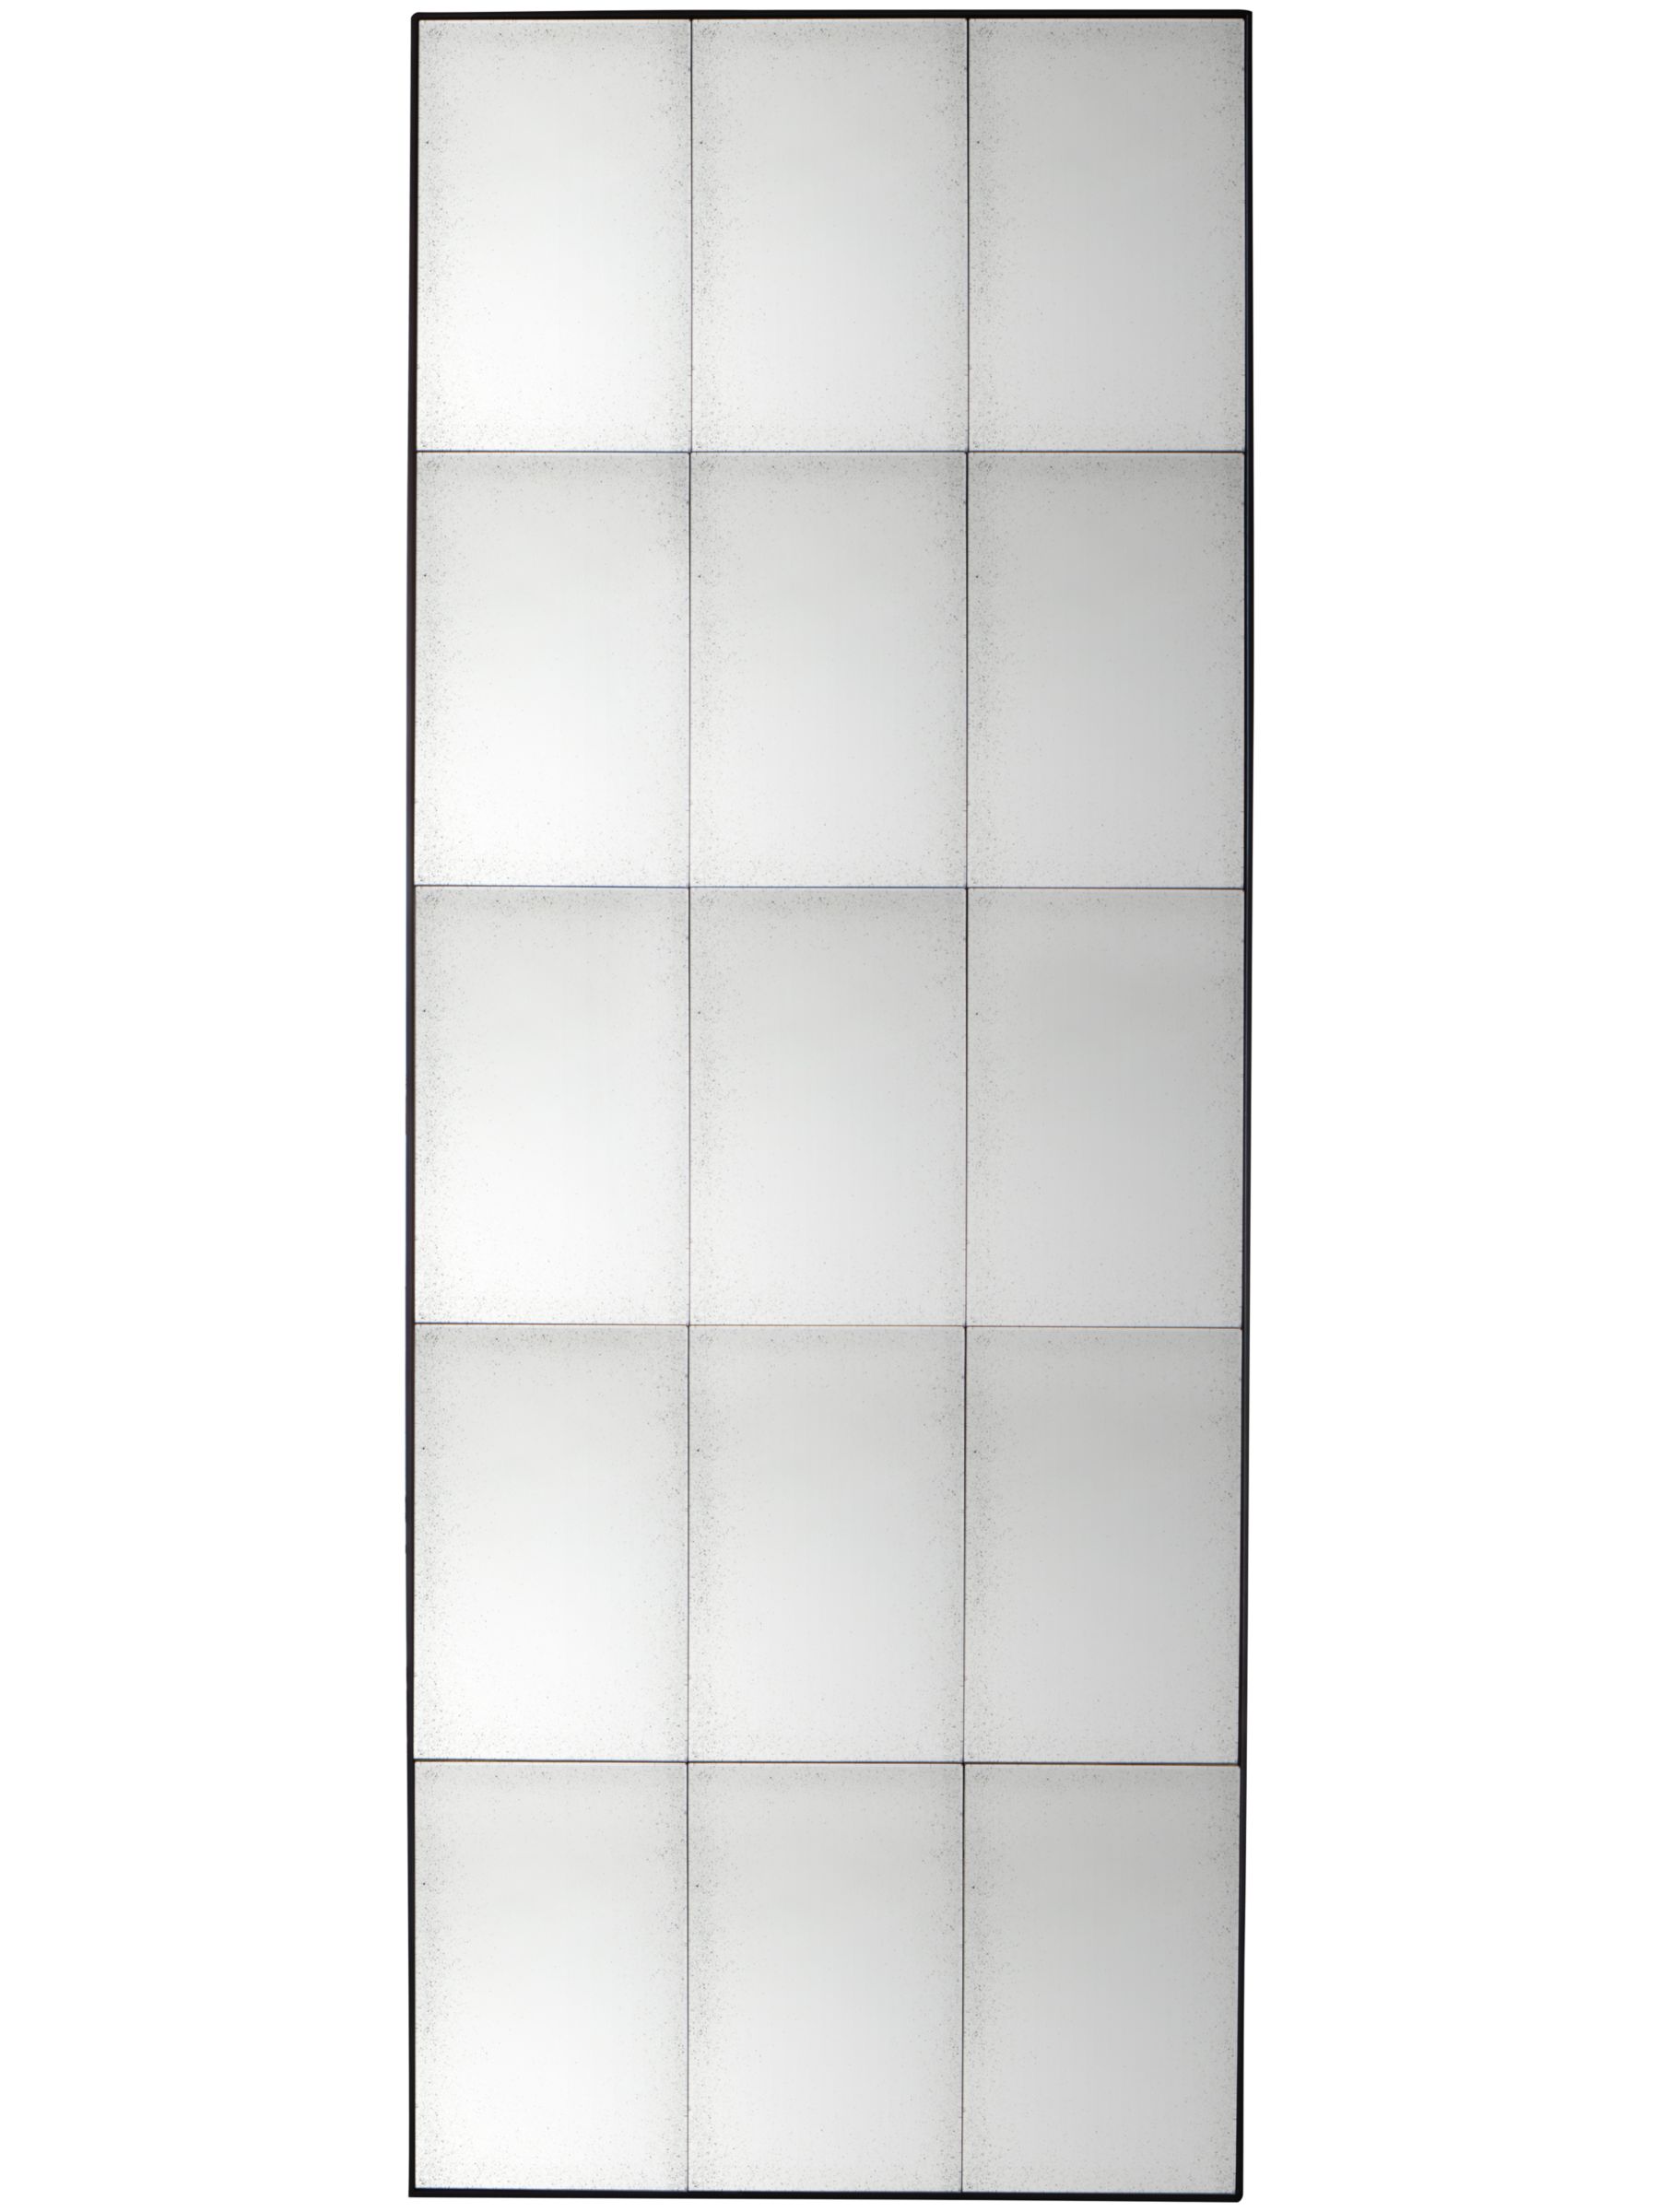 Gallery Direct Bastien Antiqued Glass Rectangular Mirror, 160 x 62cm, Black